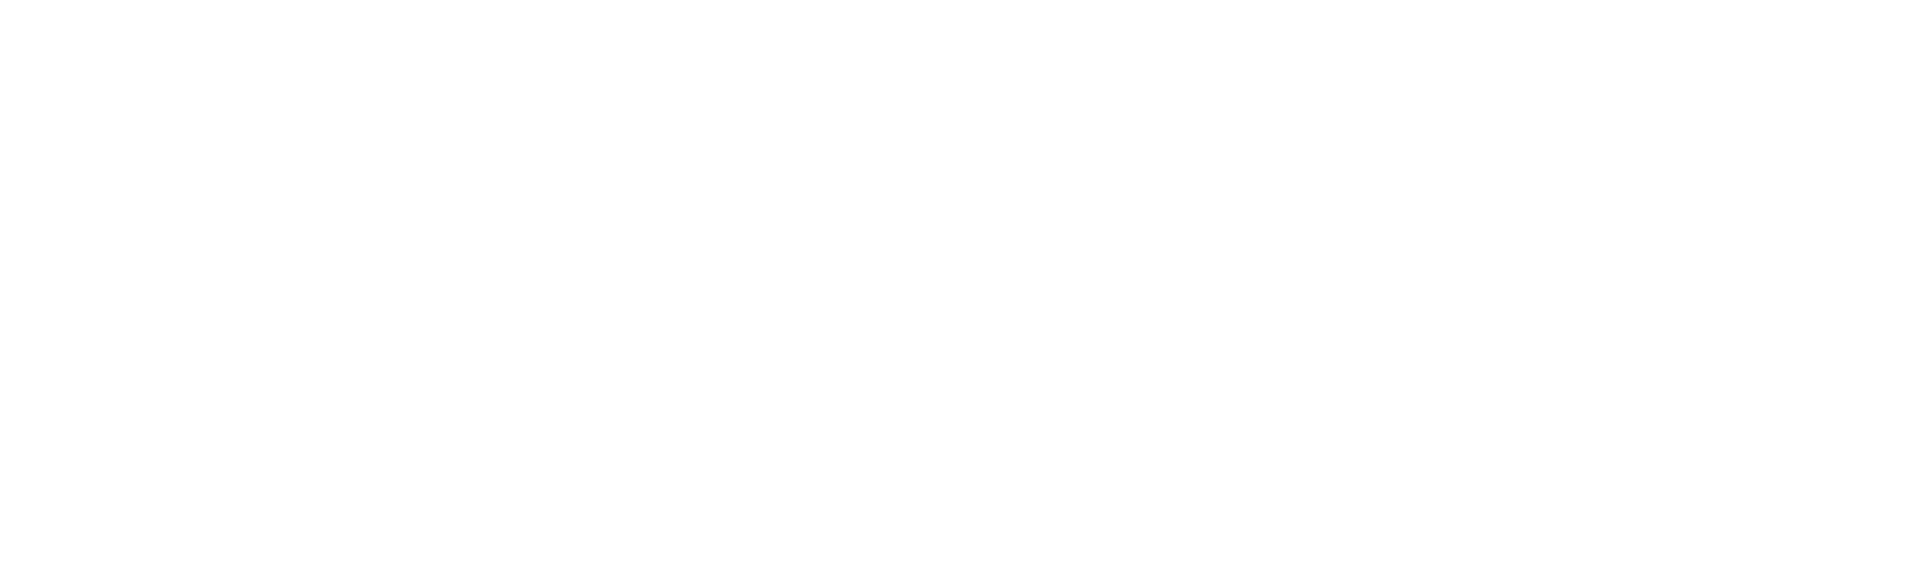 Paloalto-White-Logo-Resized